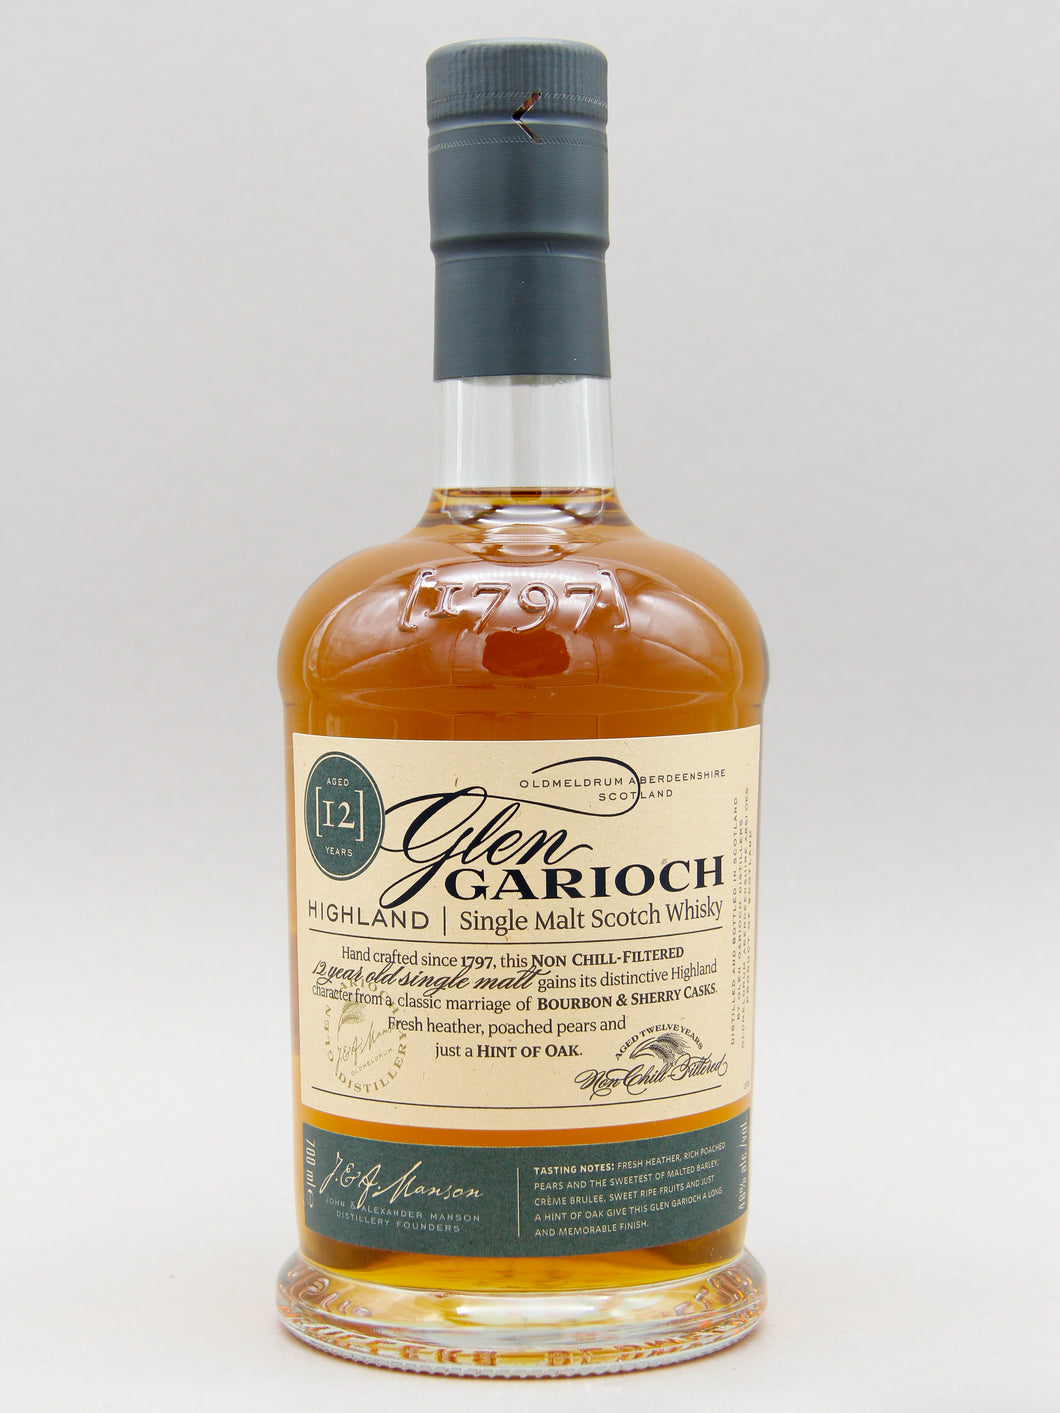 Glen Garioch 12 Years, Highlands Single Malt Scotch Whisky (48%, 70cl)